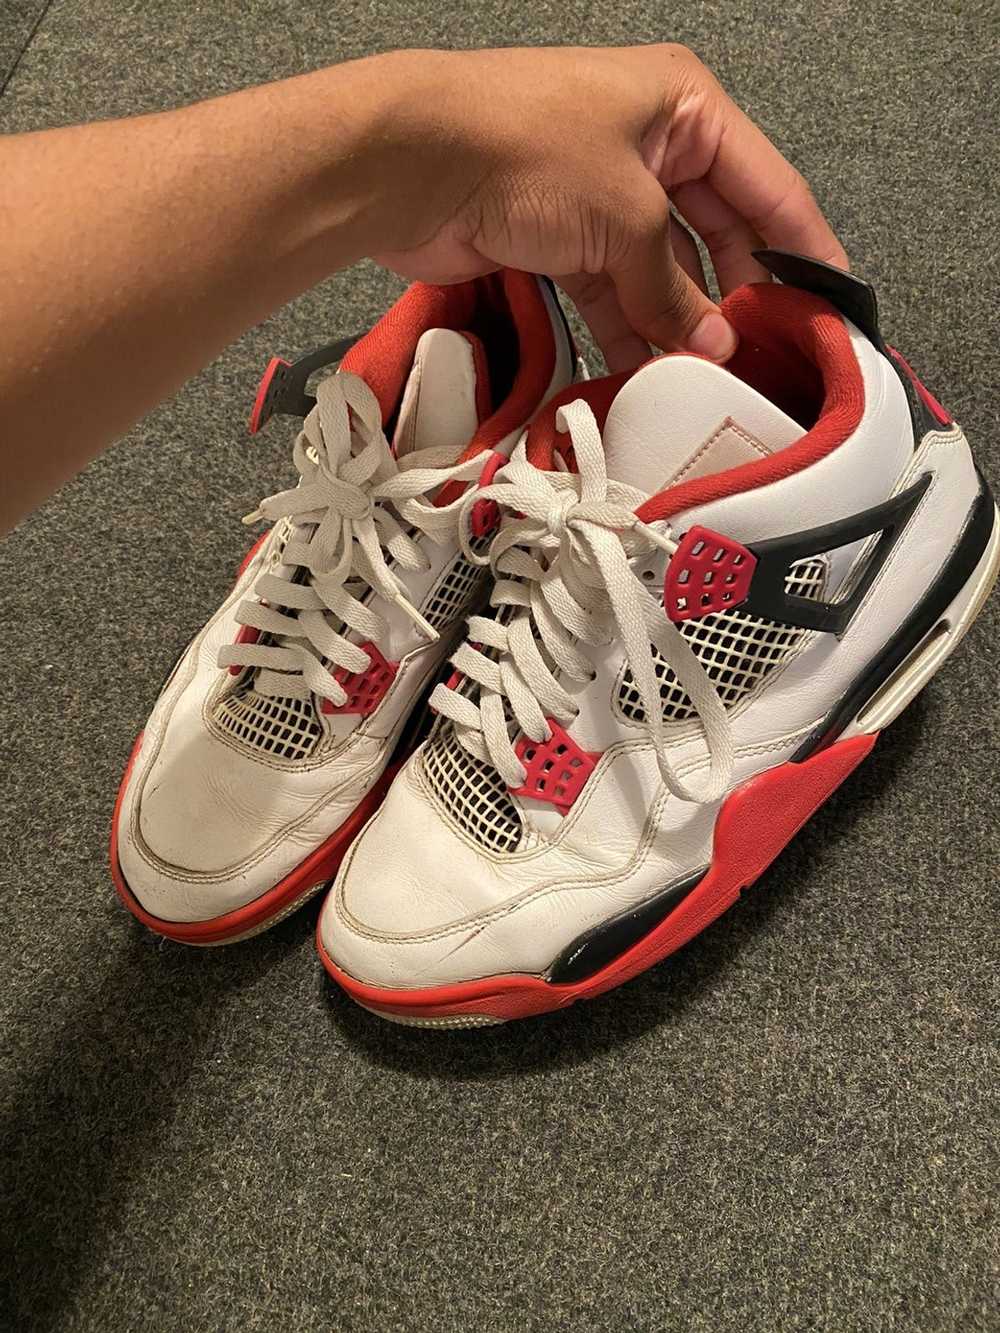 Jordan Brand Jordan 4 Fire Reds "2020" - image 1